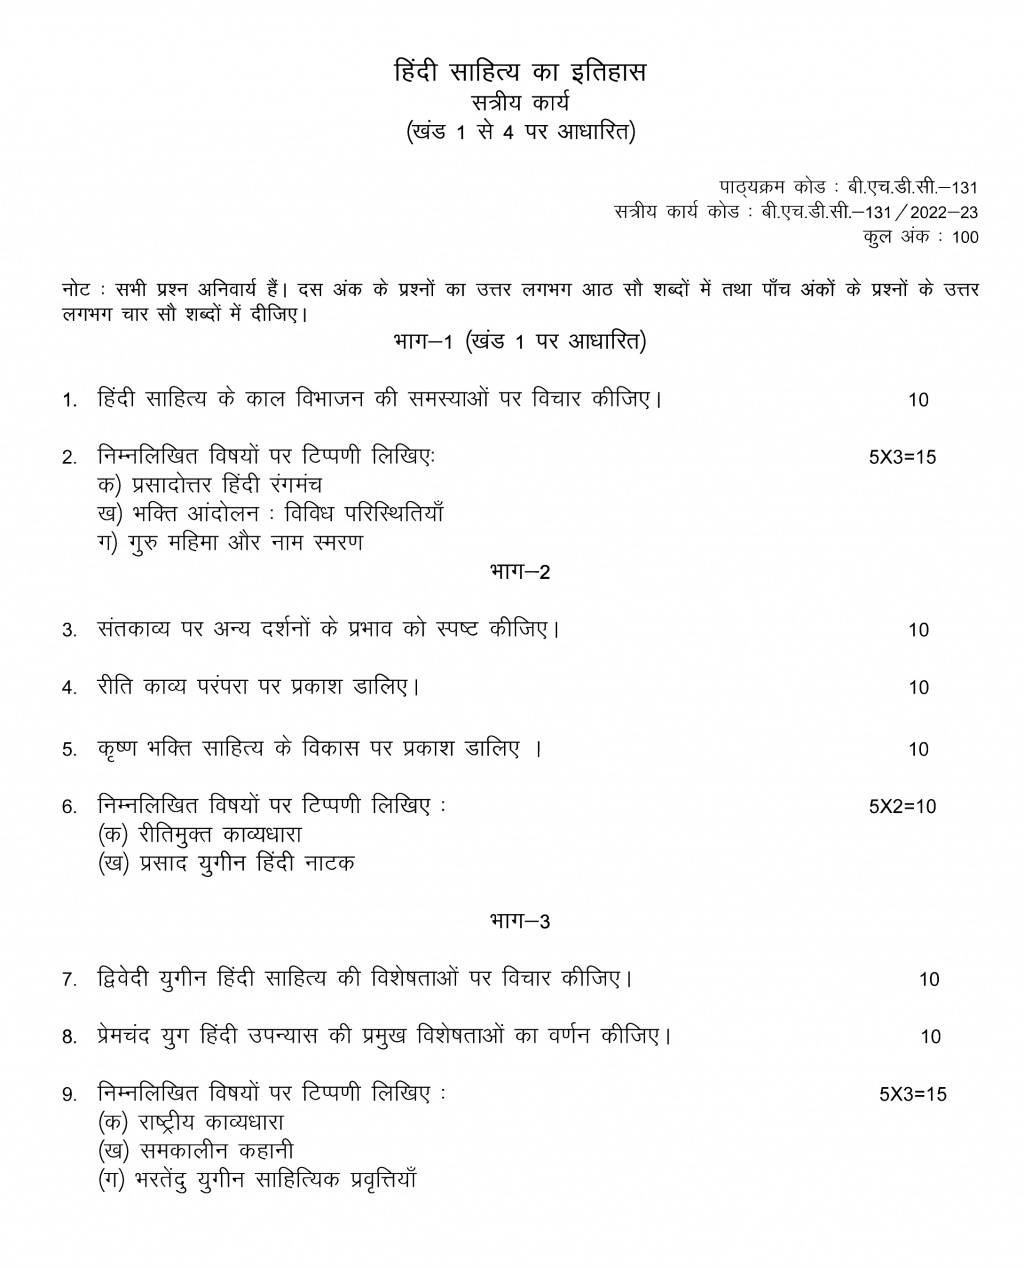 IGNOU BHDC-131 - Hindi Sahitya ka Itihas Latest Solved Assignment-July 2022 – January 2023